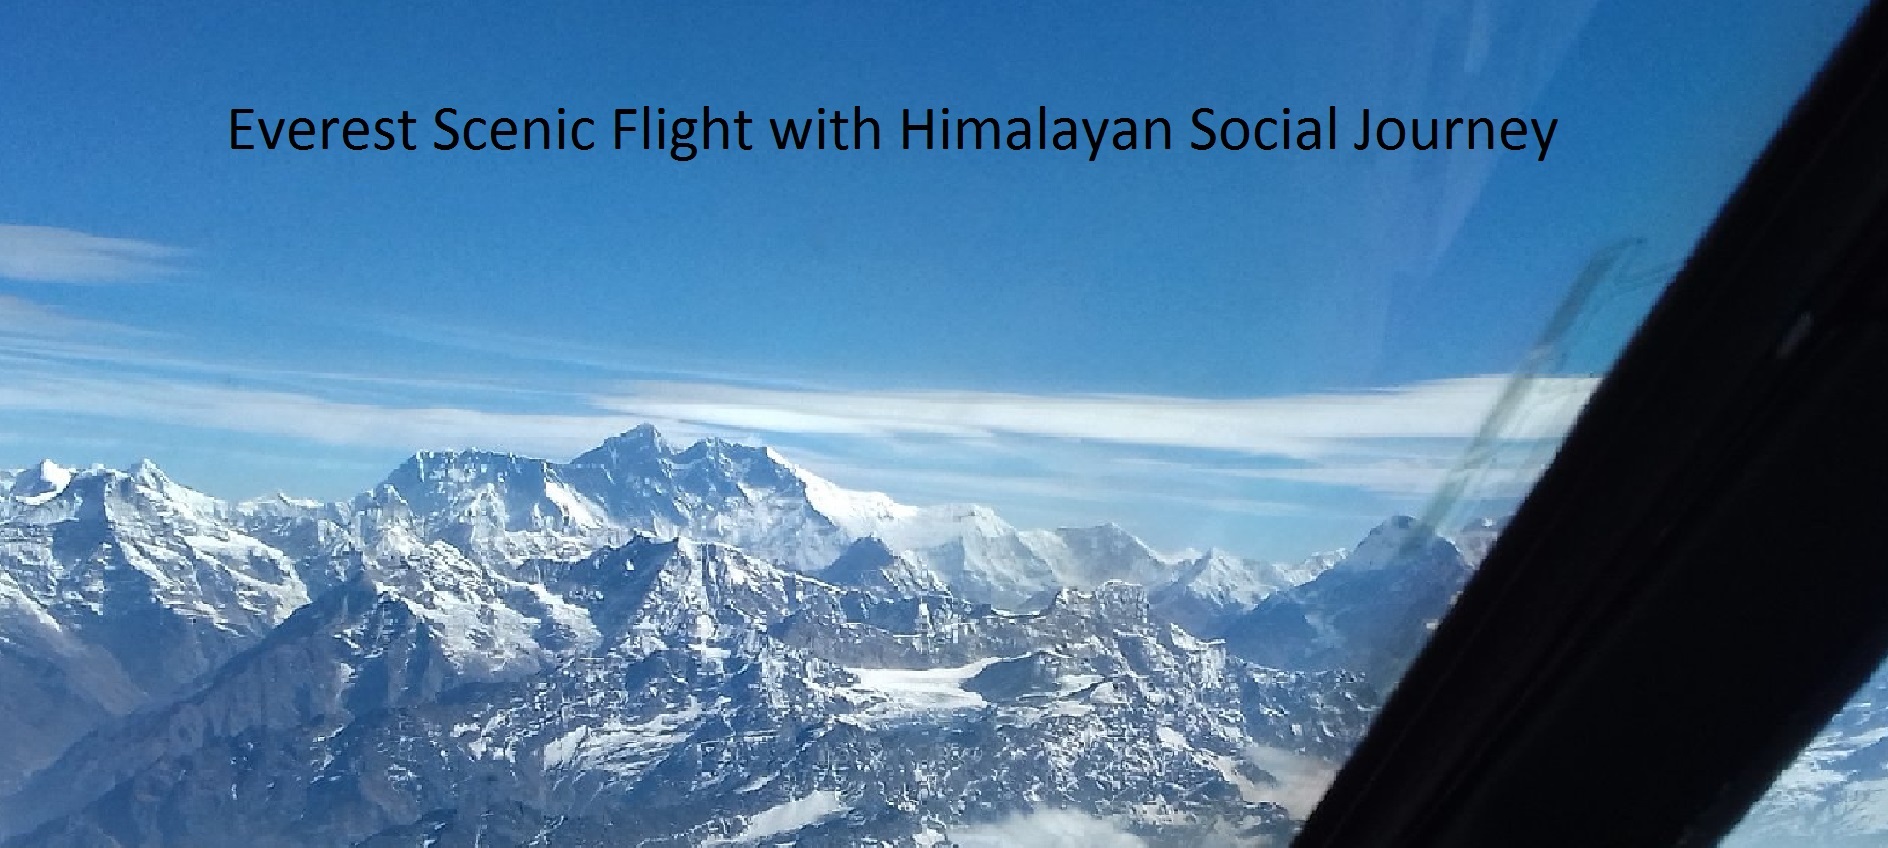 Reasons to do Mountain Flight in Nepal